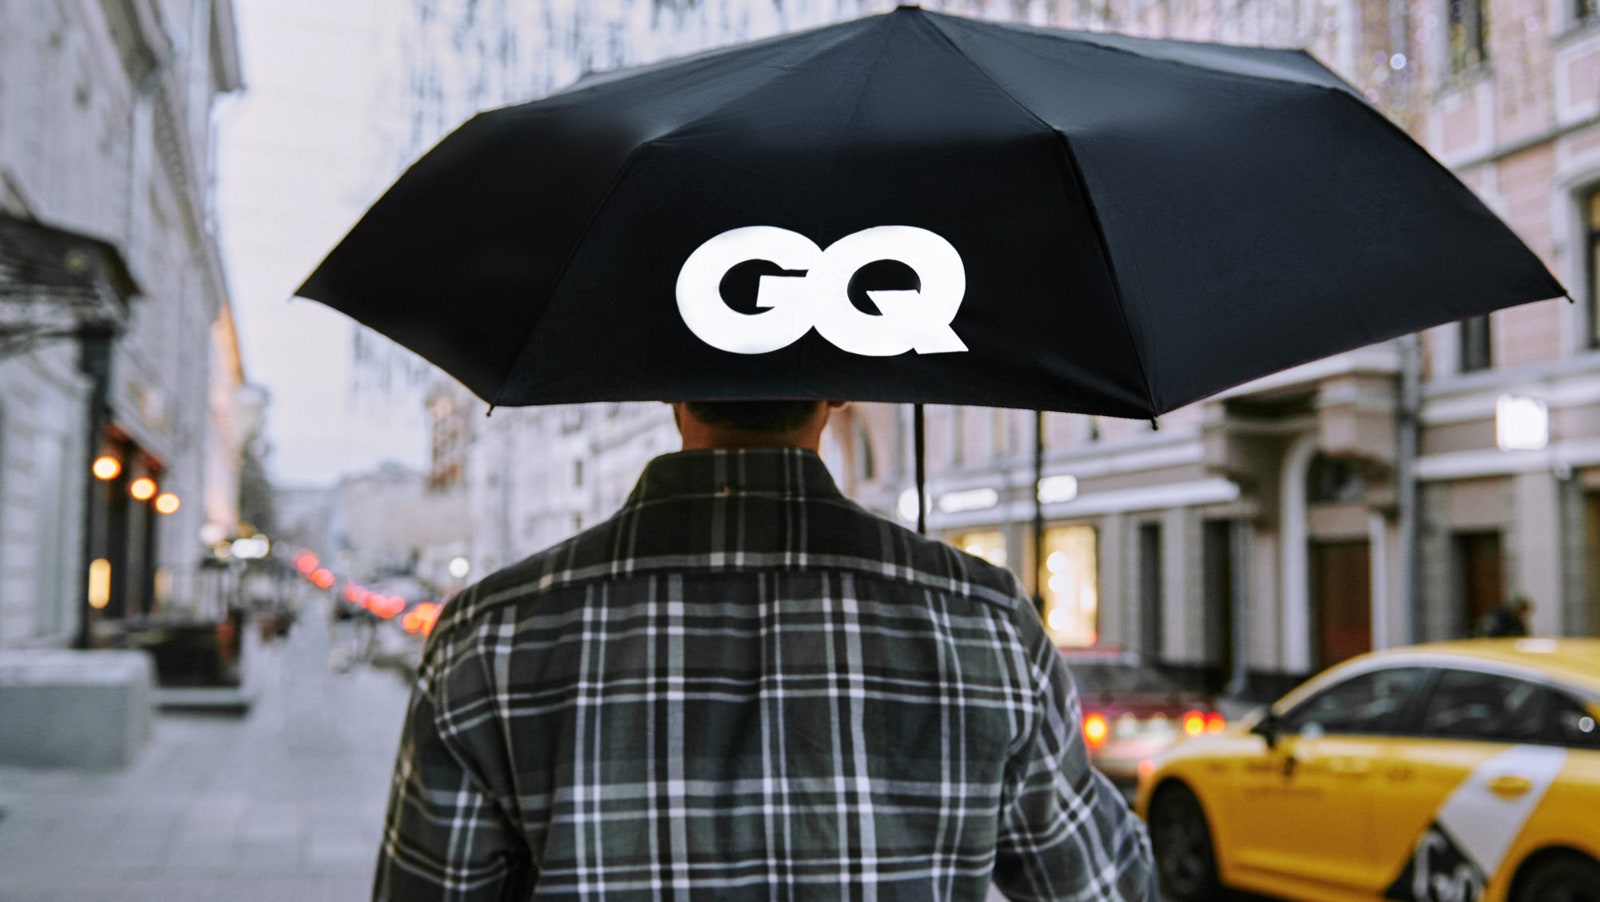 Зонт с логотипом GQ 2500 руб.